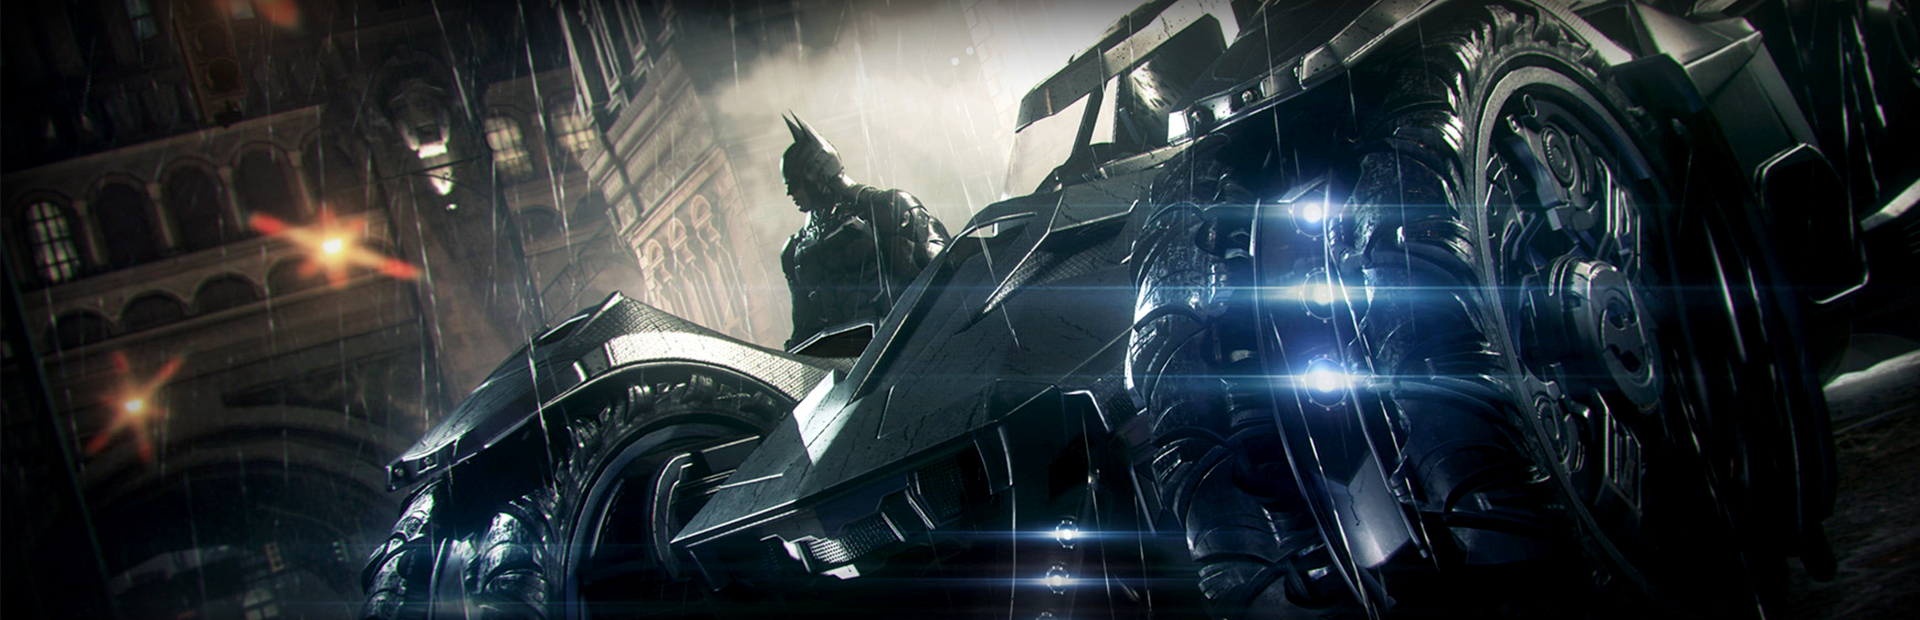 Atelier Steam::[UHD] Batman: Arkham Knight - 4K 60FPS Wallpapers